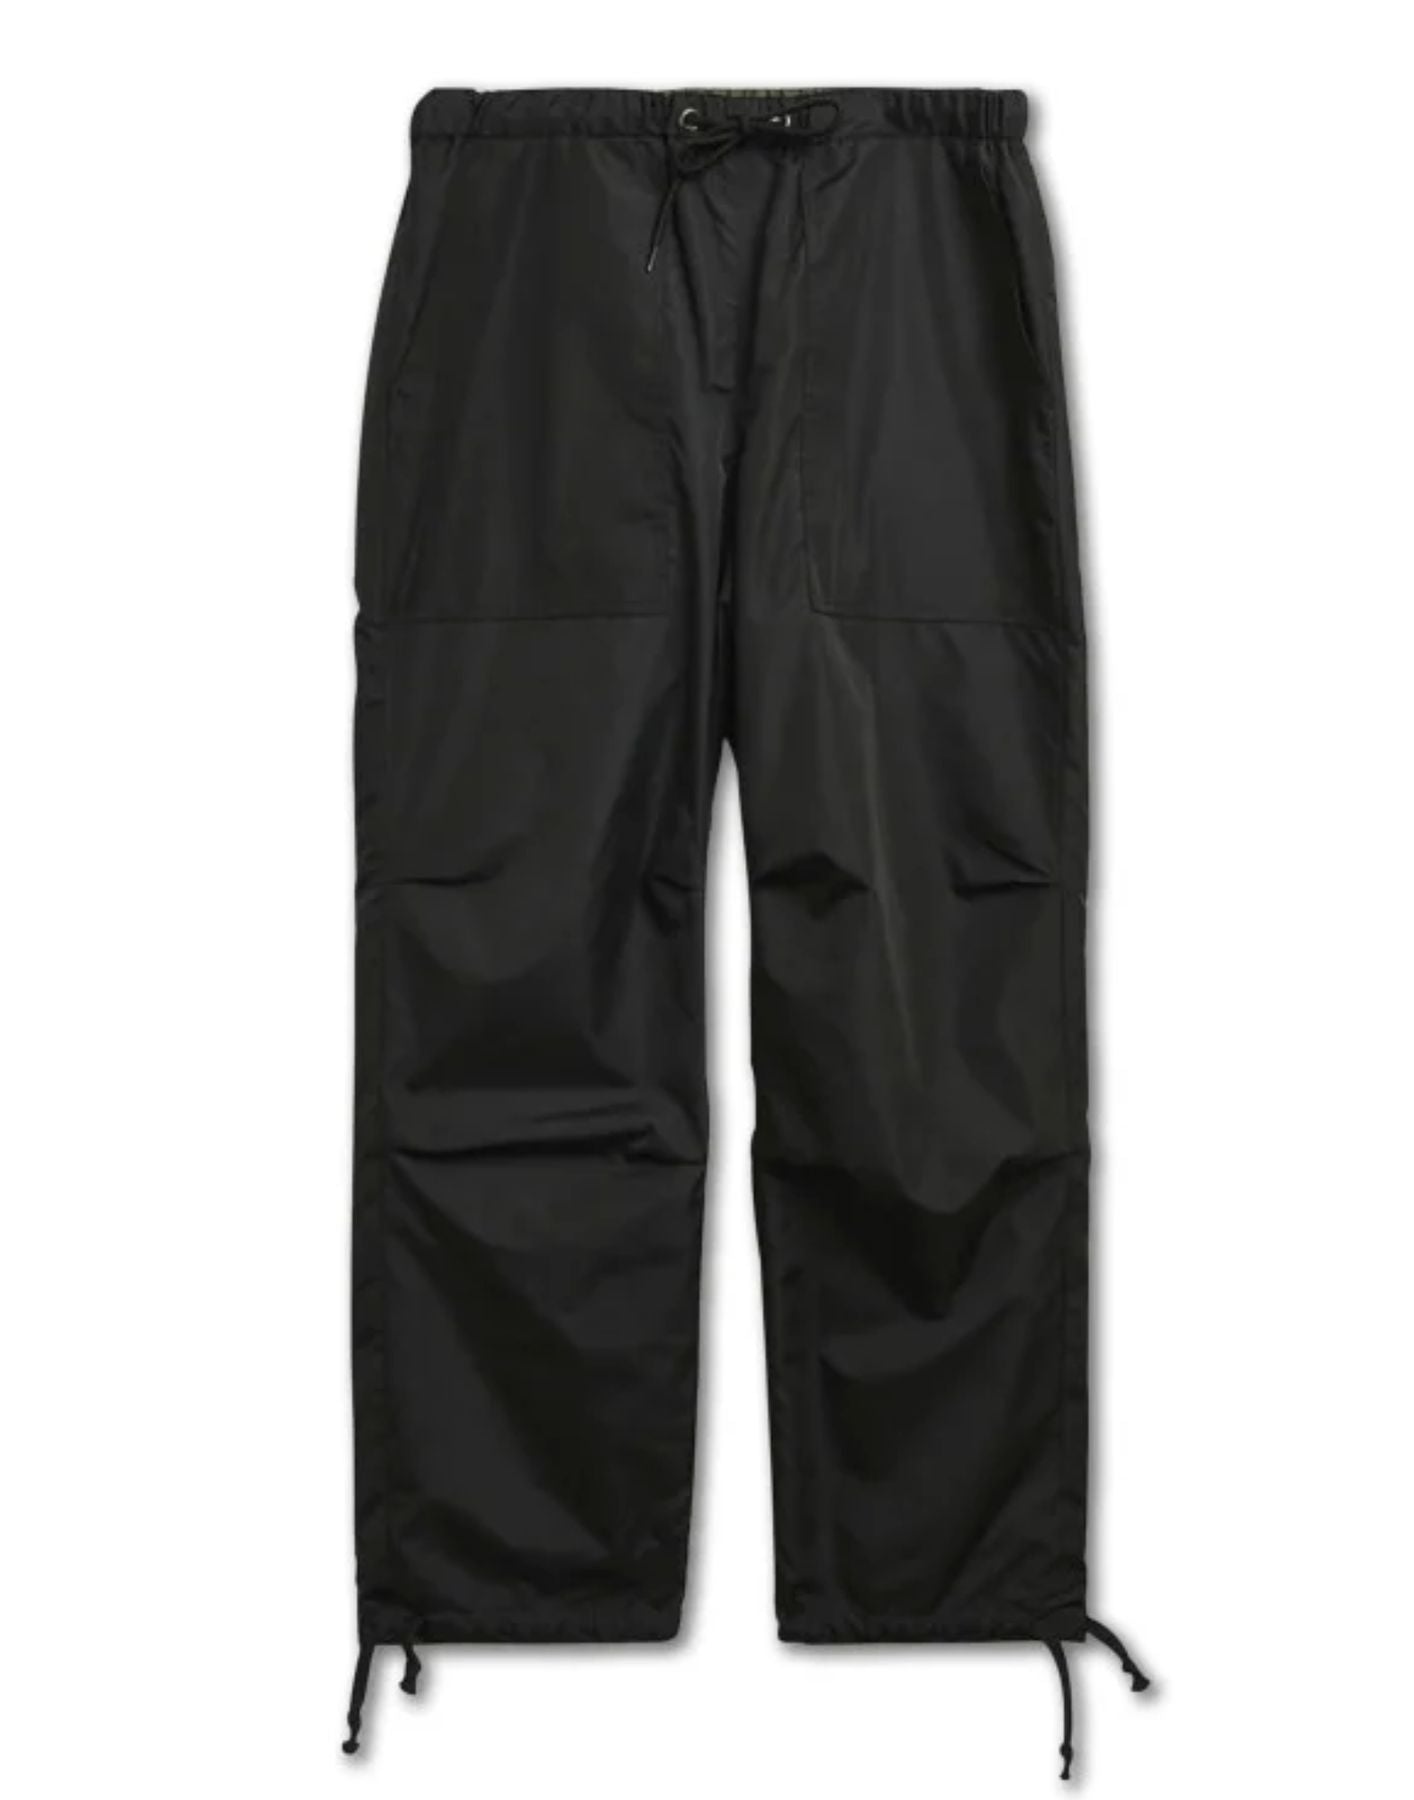 Pantalones hombre R131ndml Black Taion